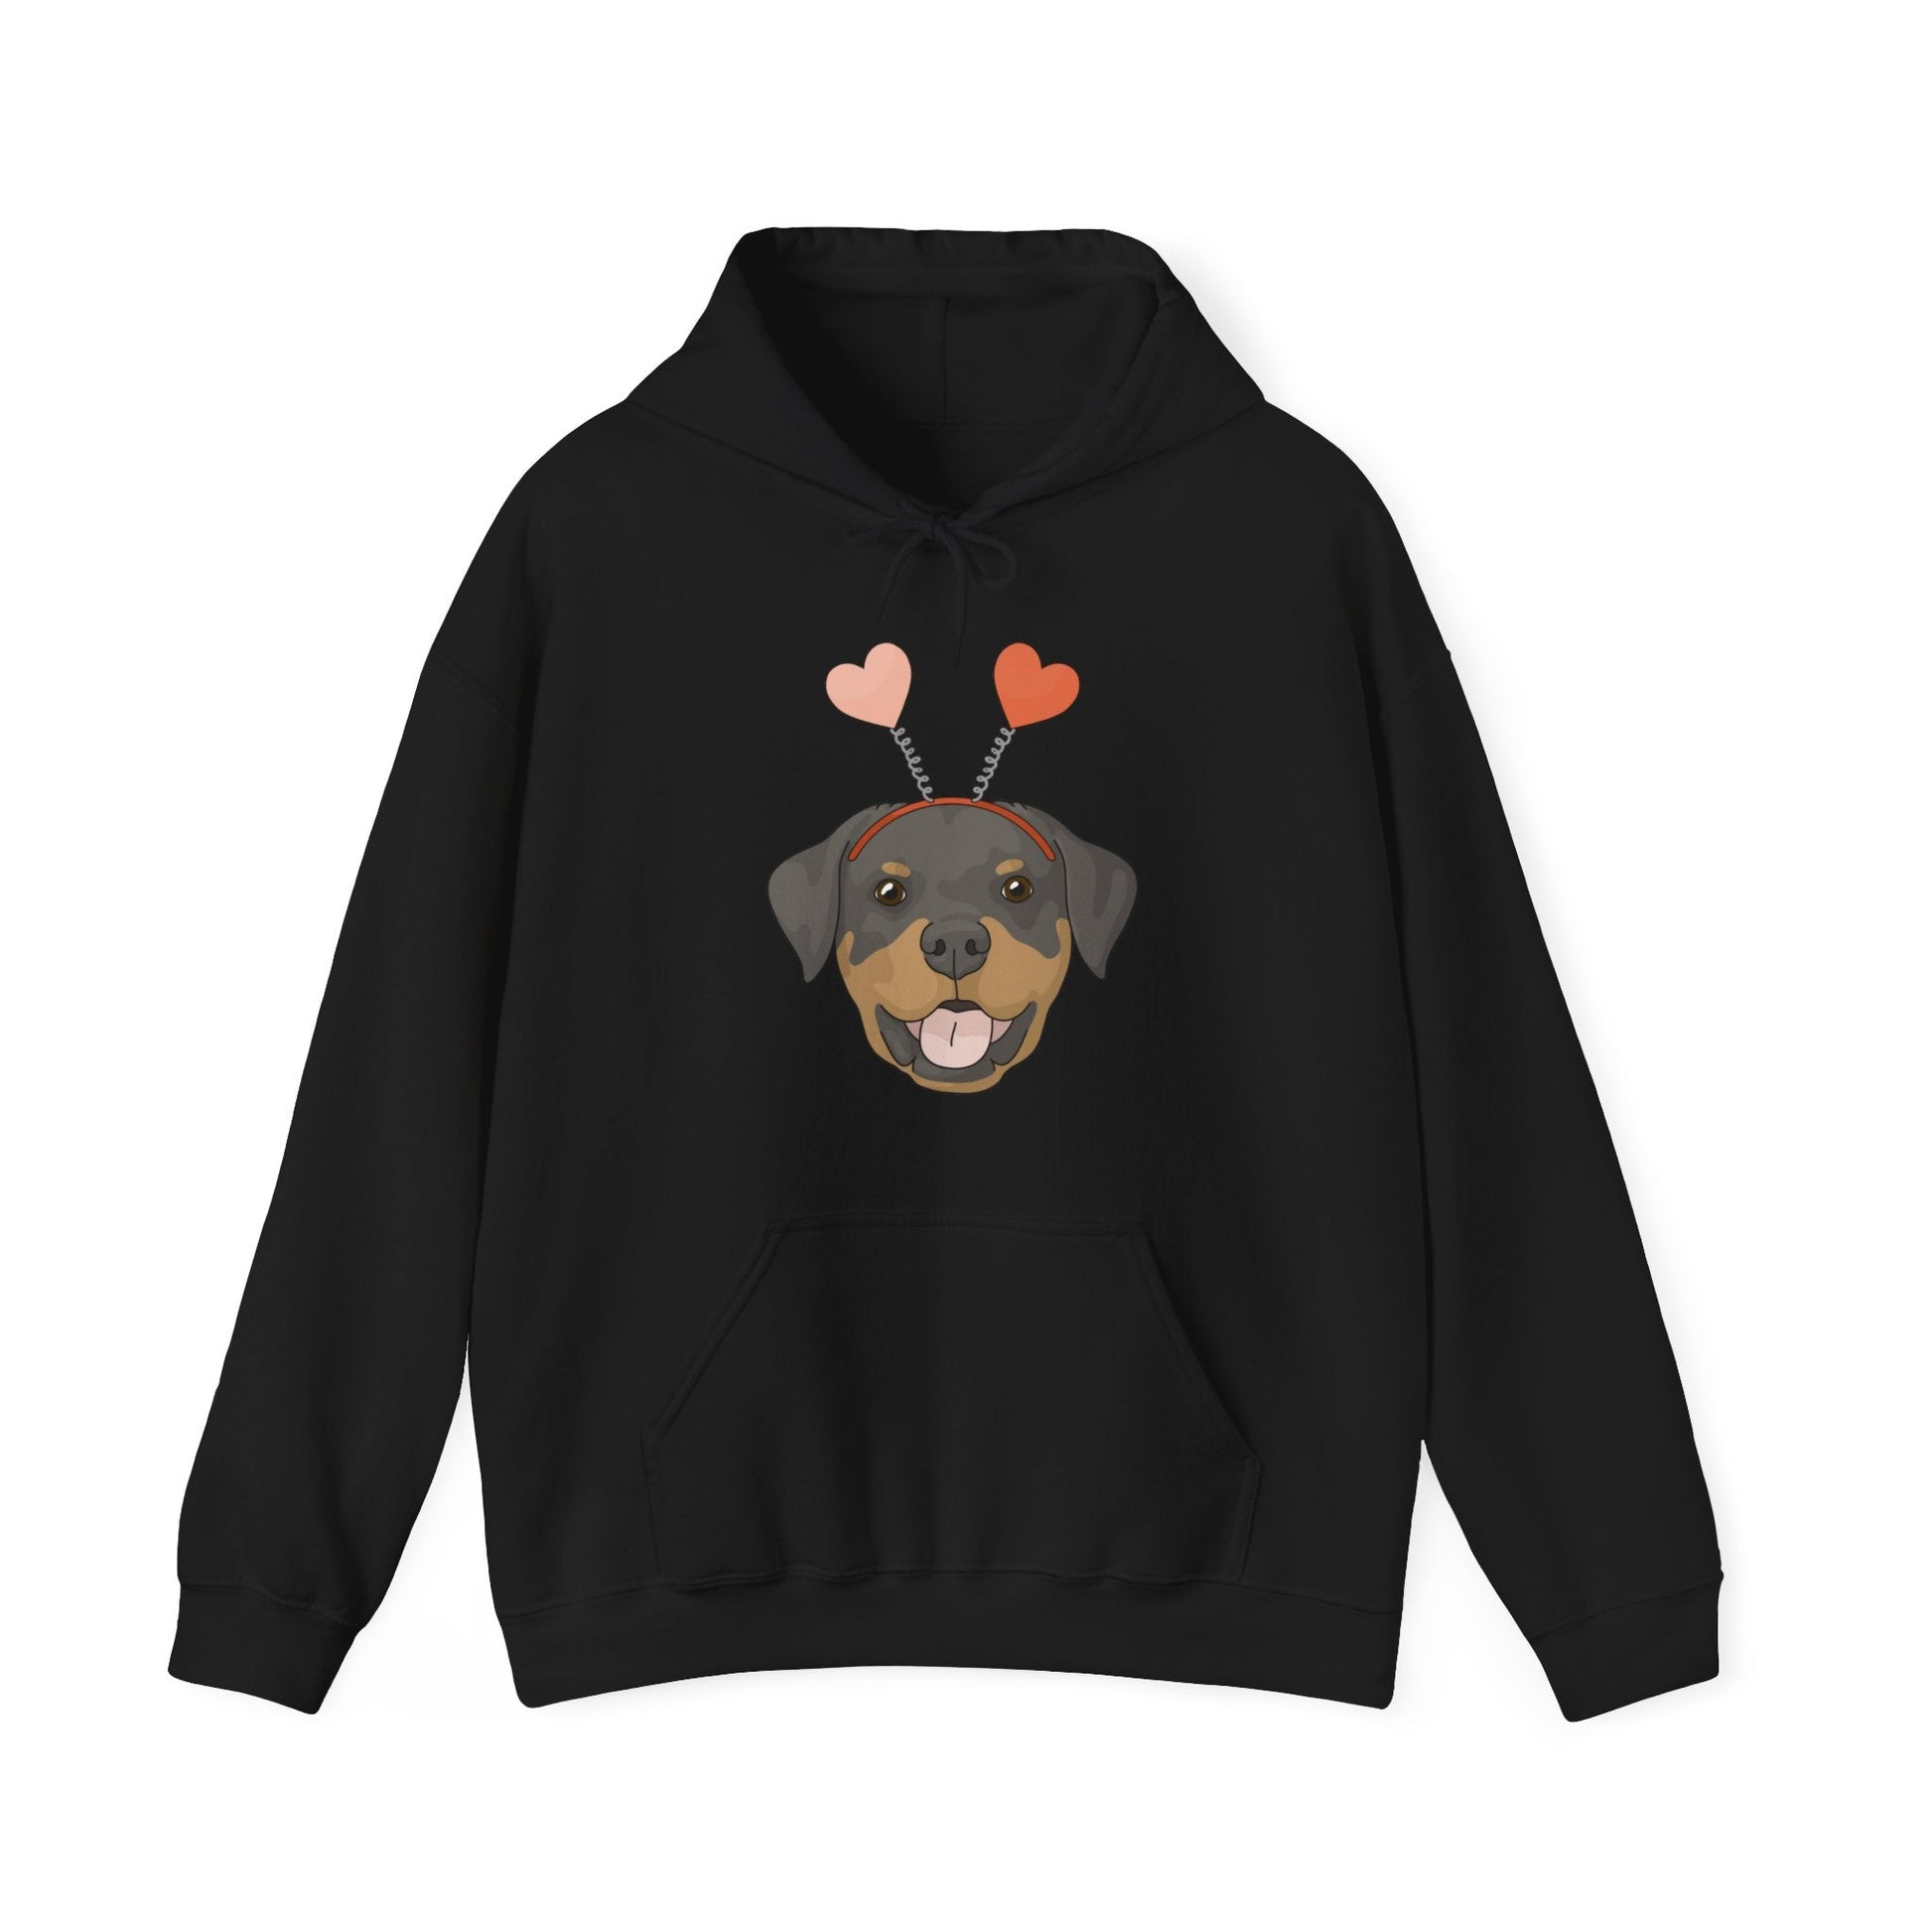 A Very Rottie Valentine | Hooded Sweatshirt - Detezi Designs-12683107734182866150